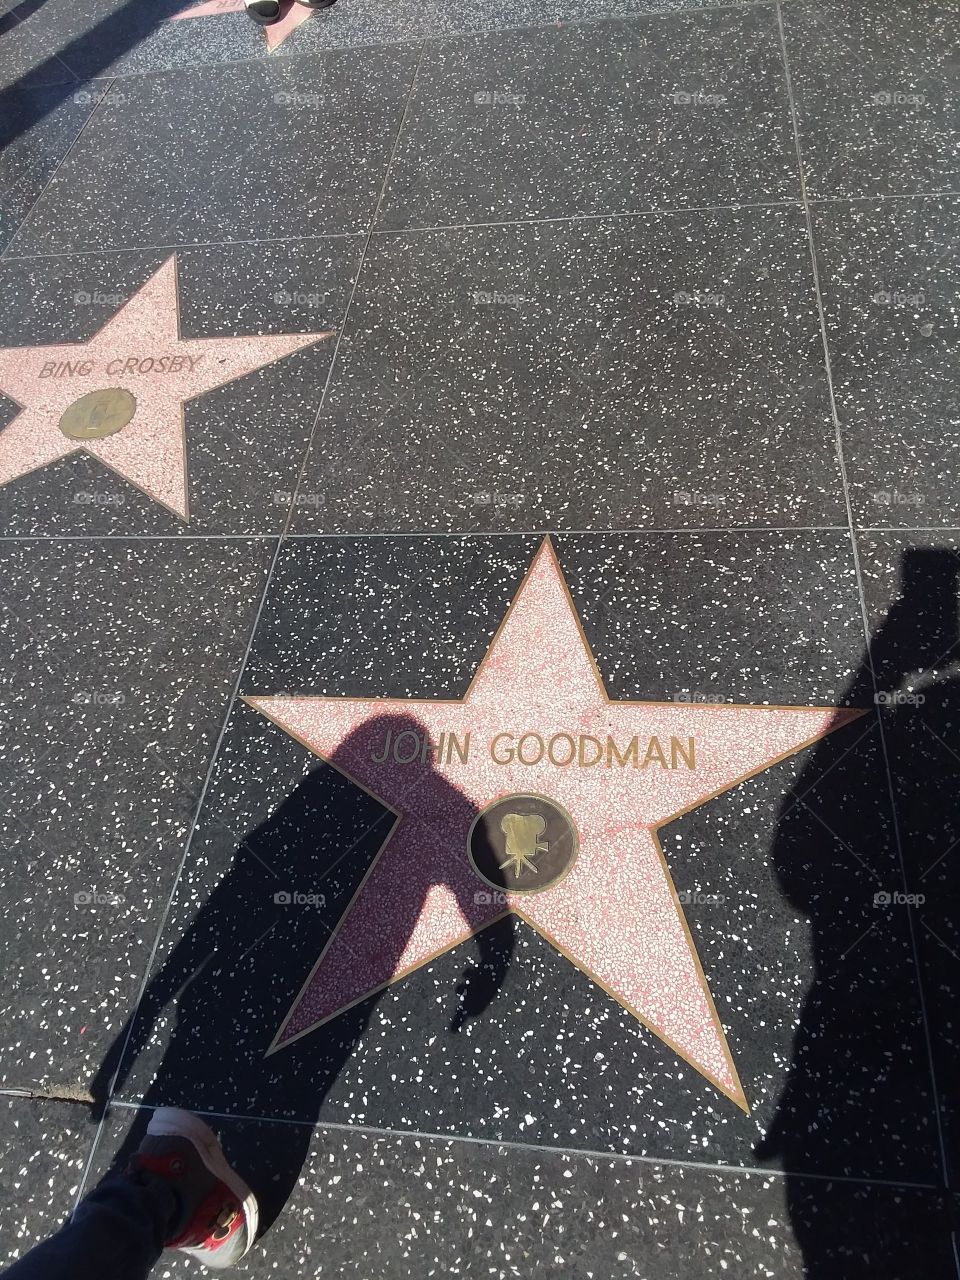 John Goodman Hollywood star